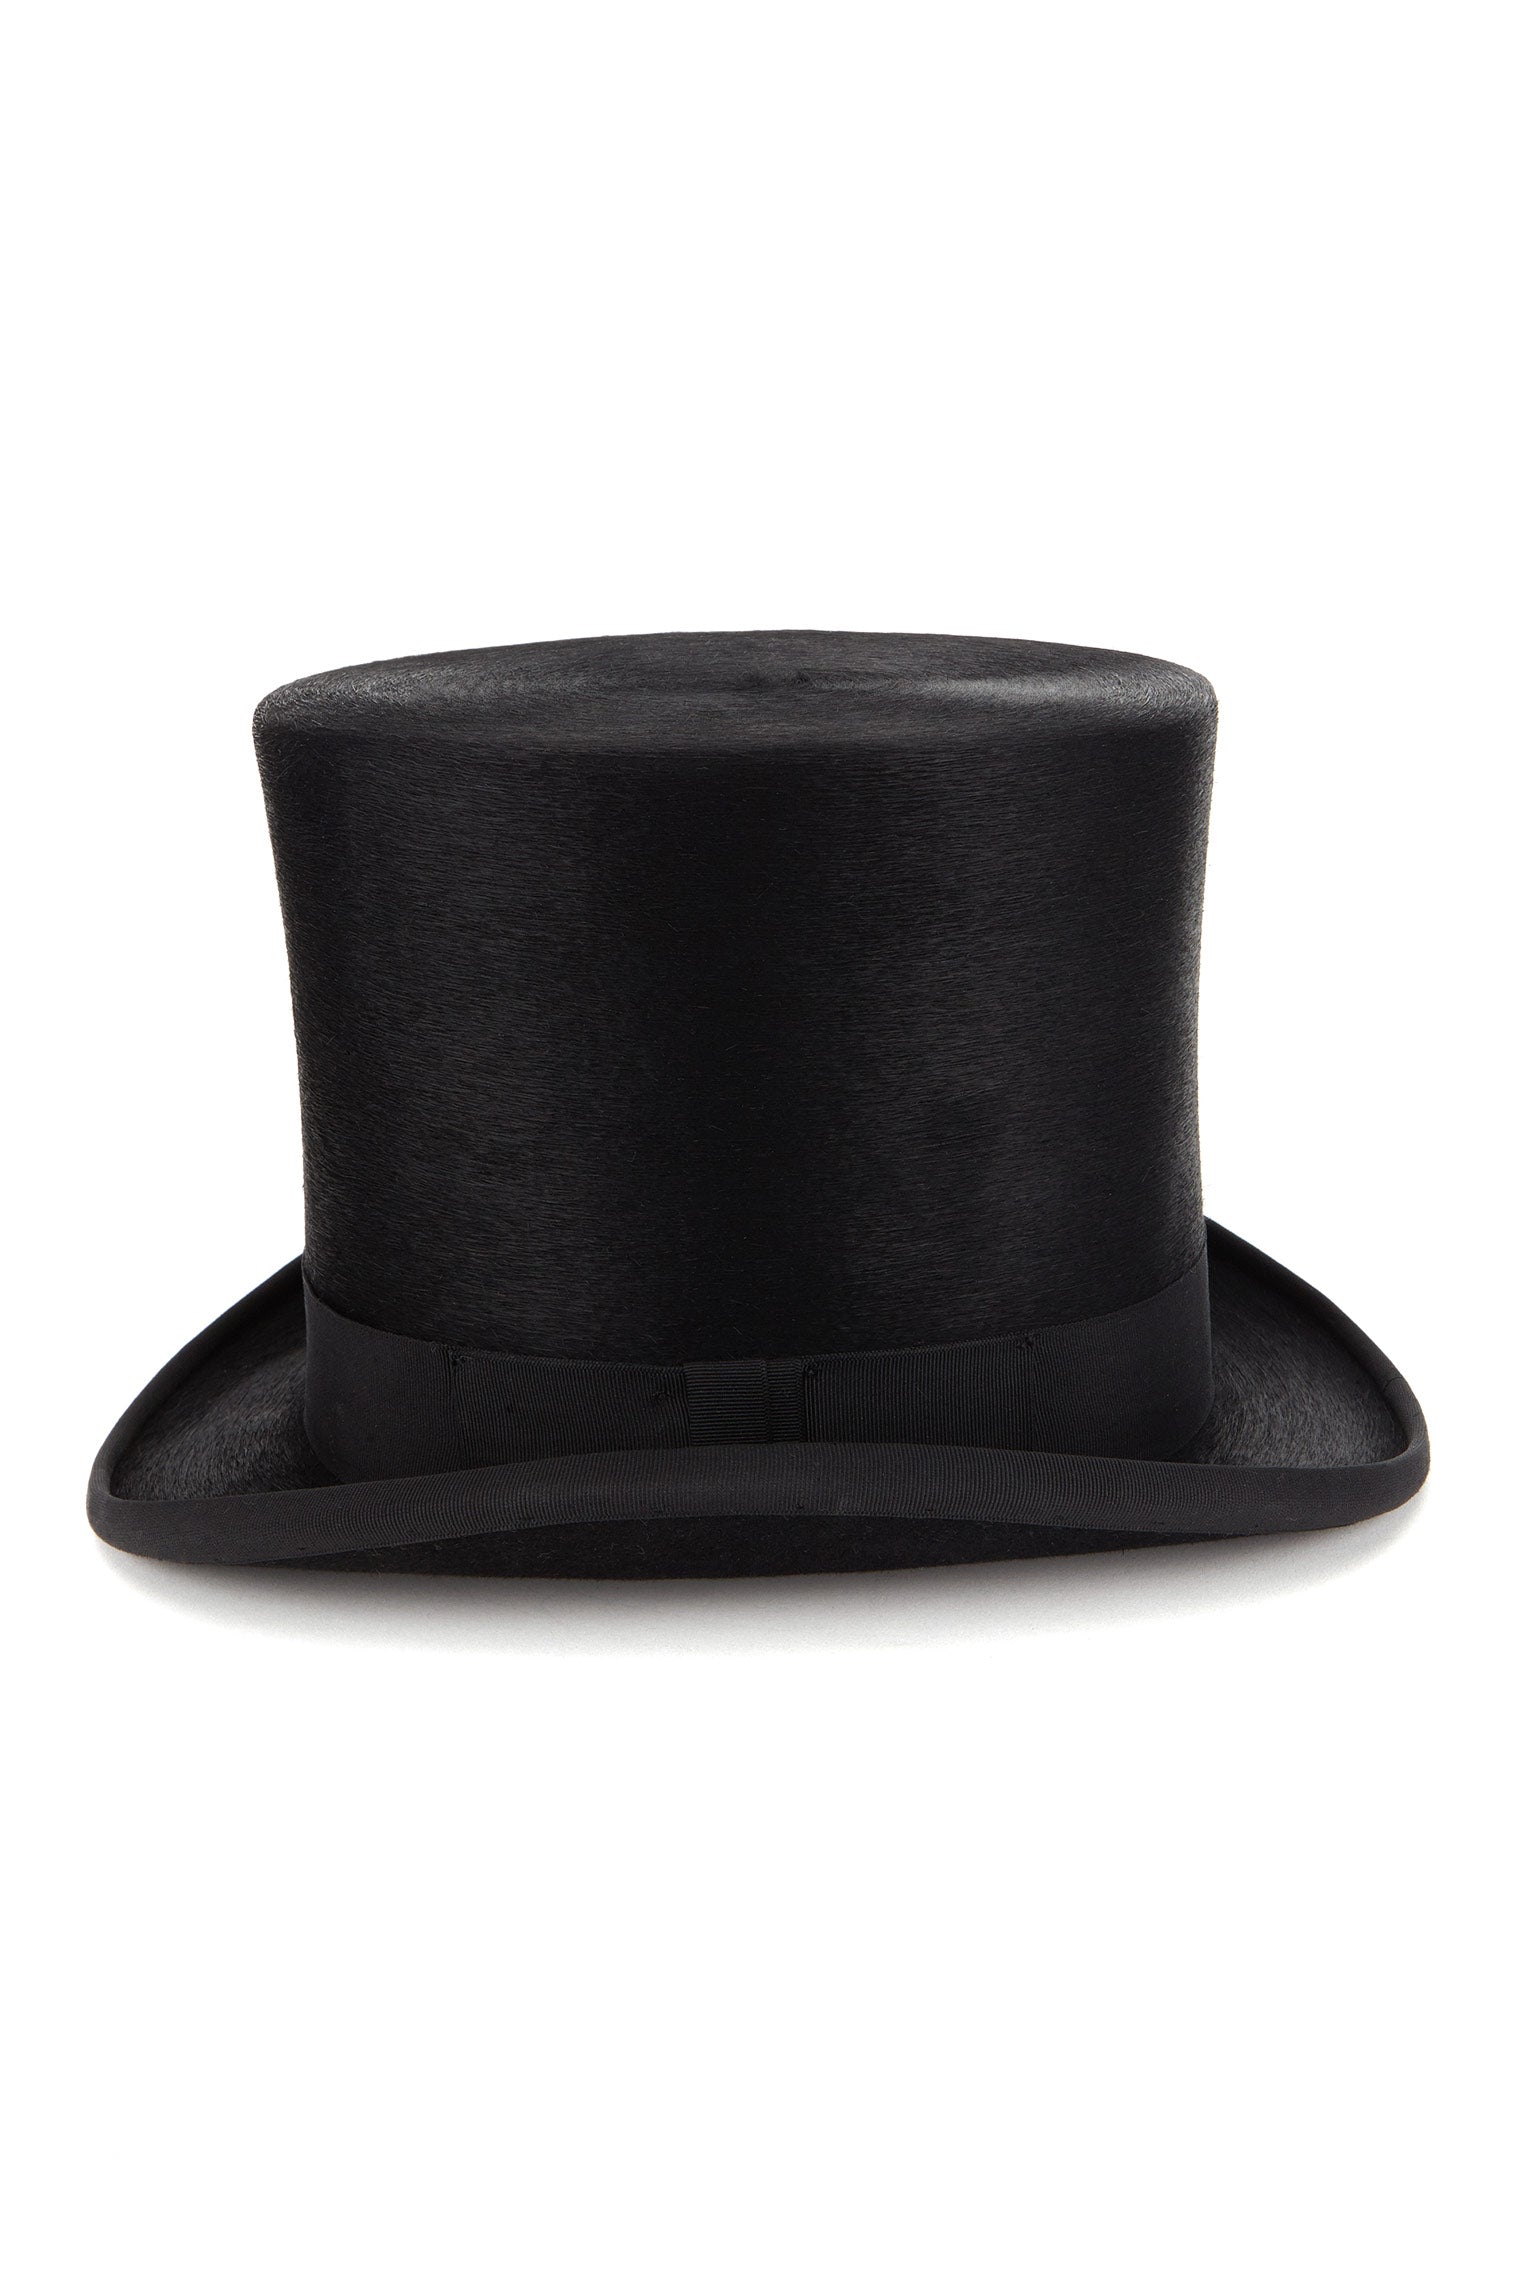 Westminster High Crown Top Hat - Lock & Co. Hats for Men & Women